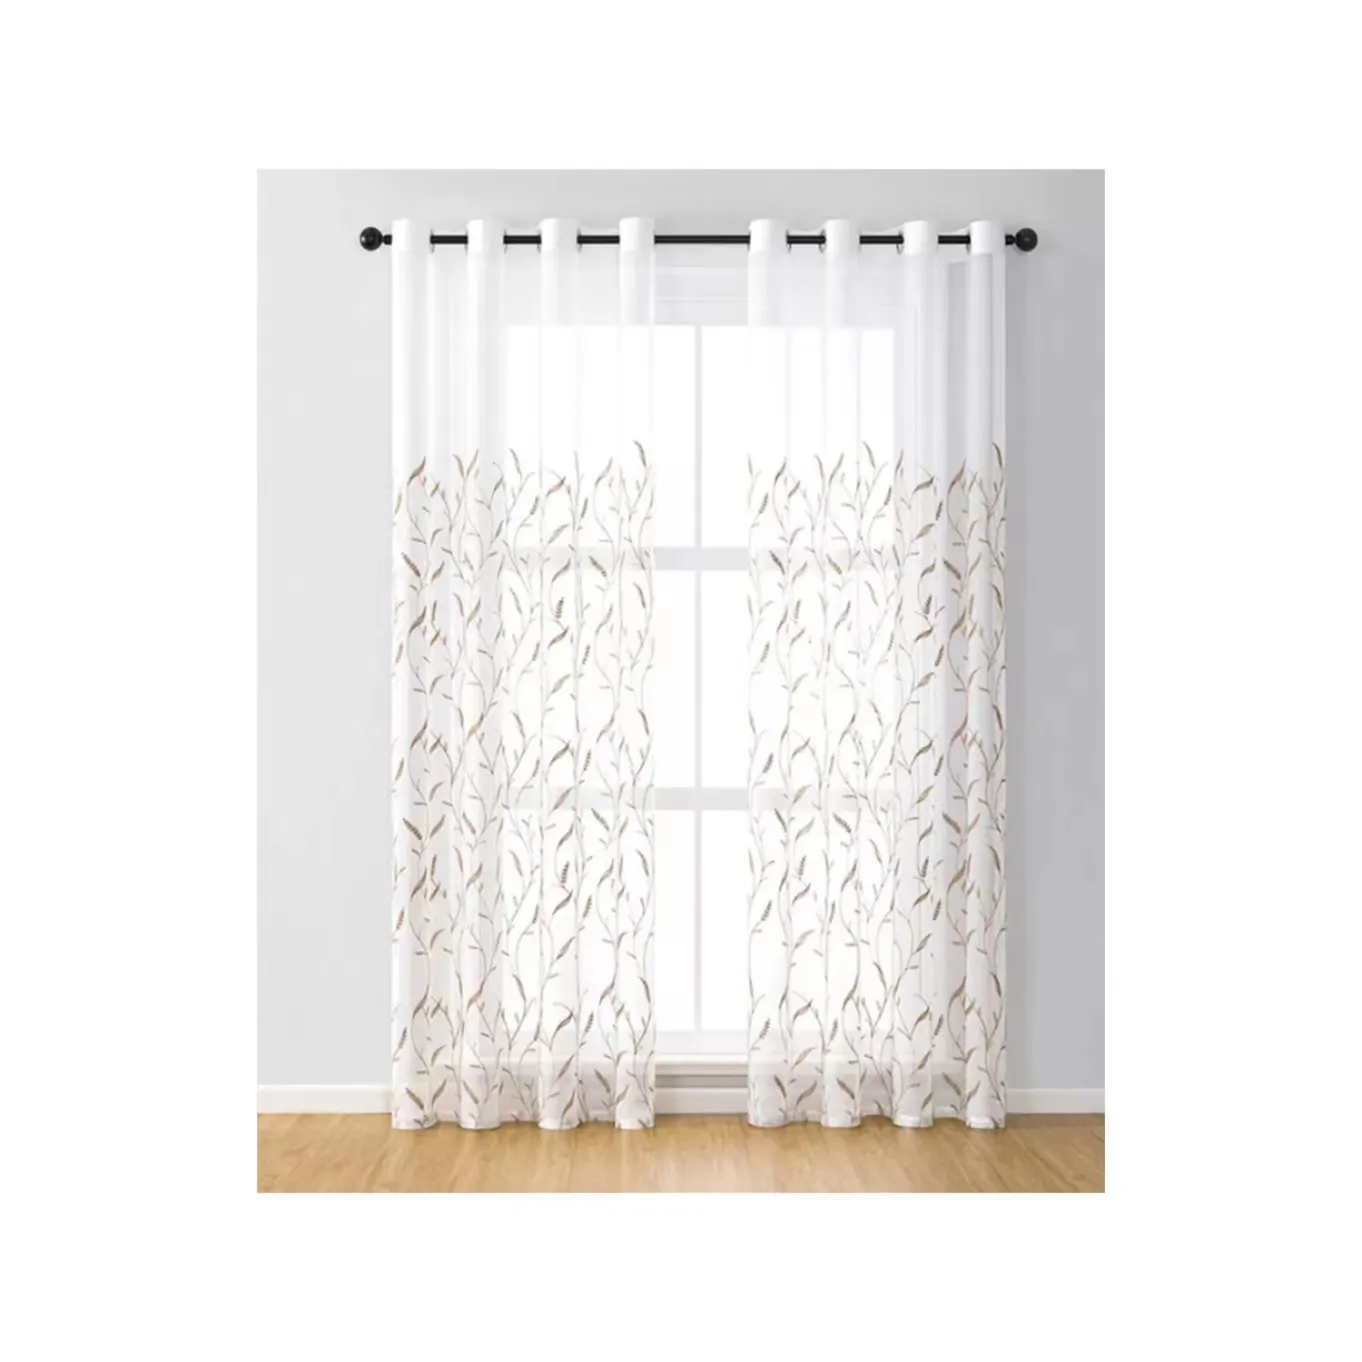 Hot selling Curtain Drapes Light Filtering Leaf Pattern Polyester Leaf Embroidered Window for Bedroom /livingroom/hotel/office